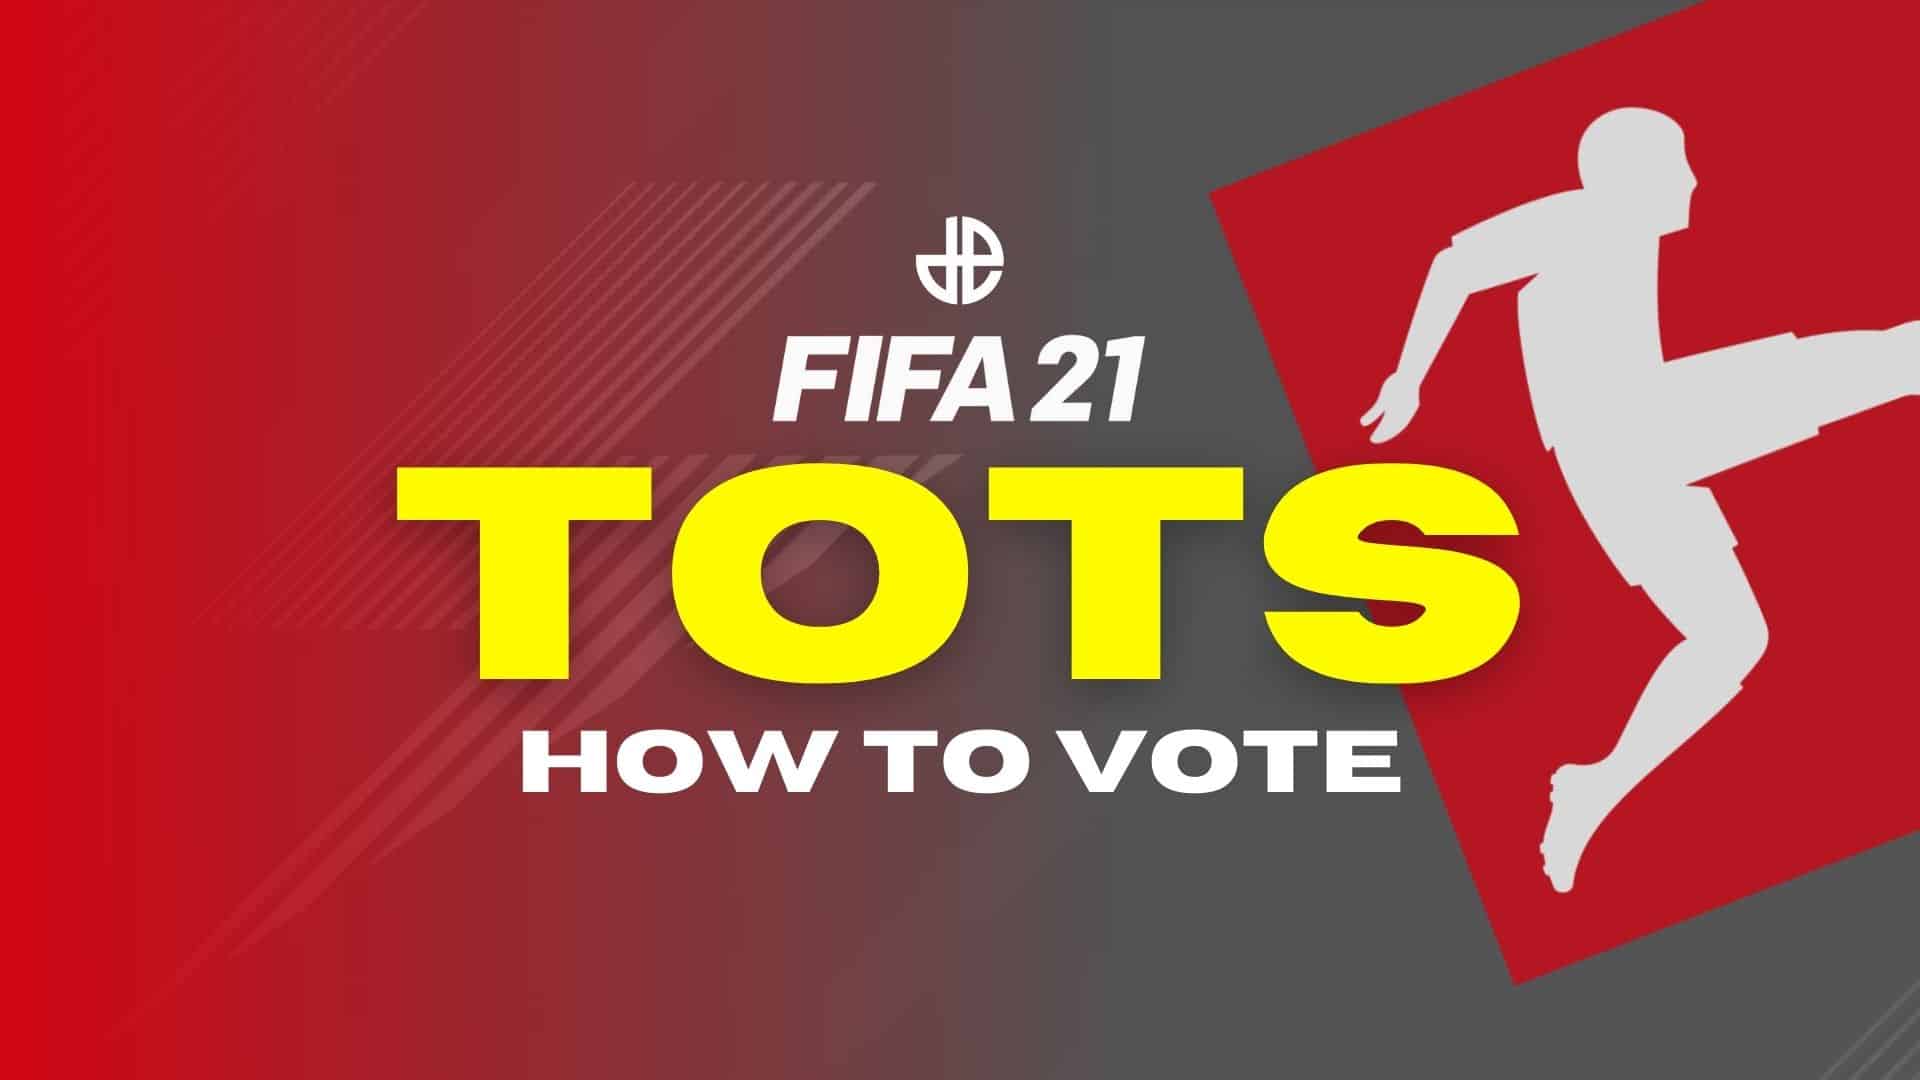 Bundesliga FIFA 21 Team of the Season voting now open.